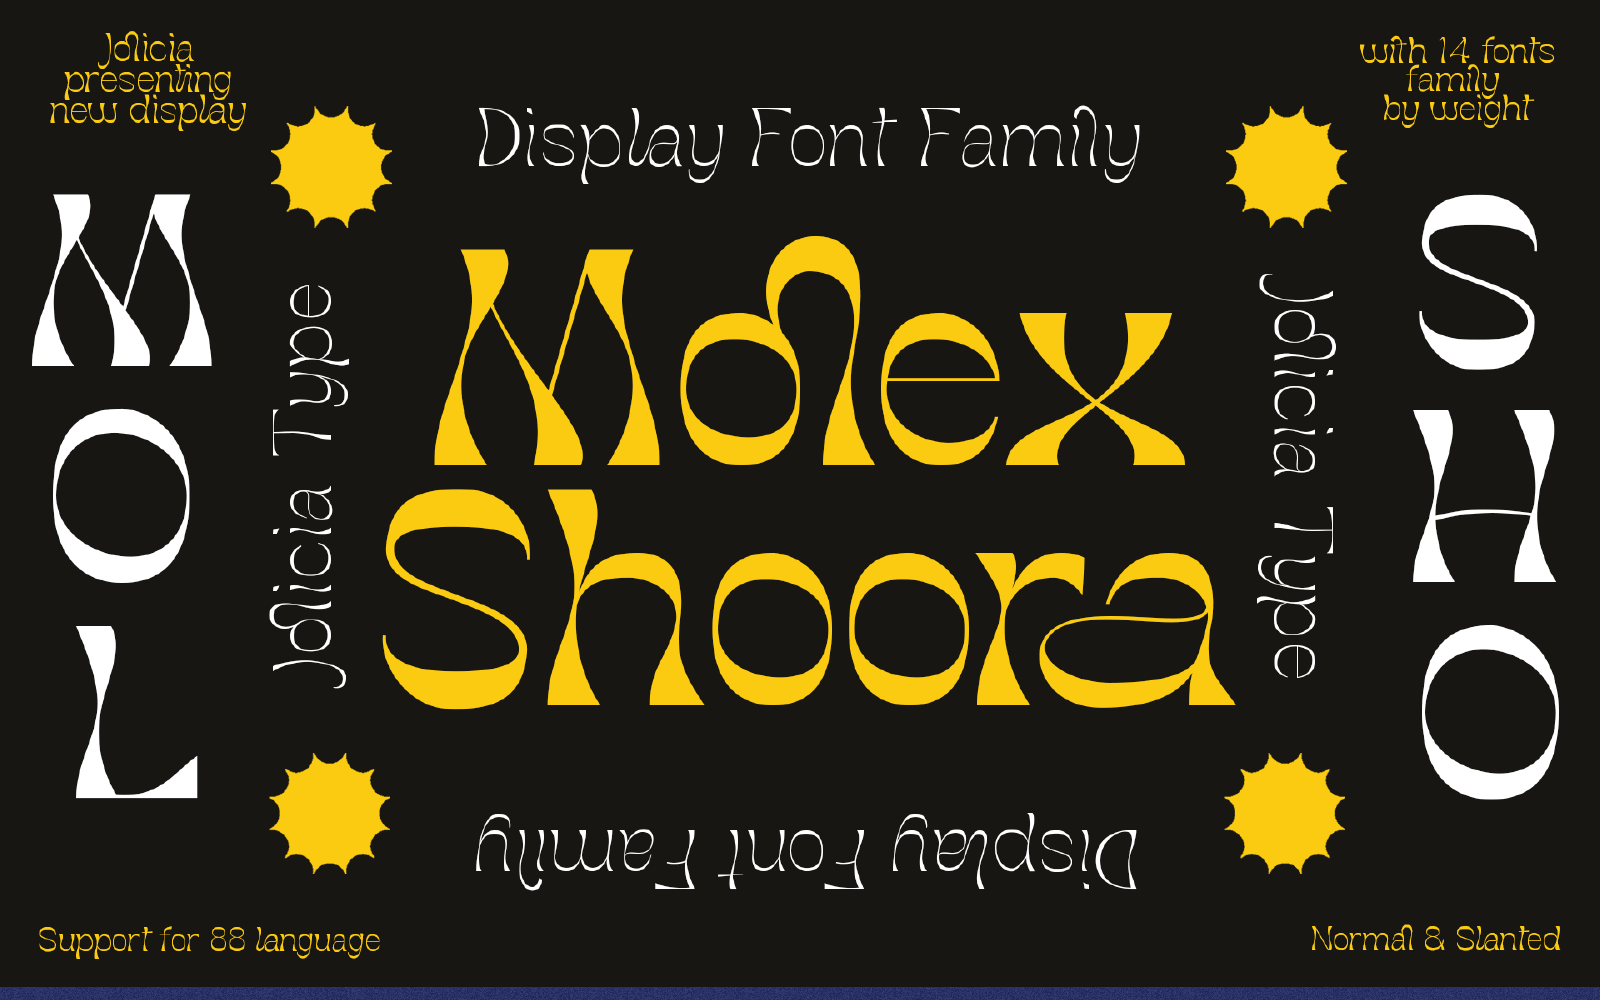 Molex Shoora | Reverse Contrast Font